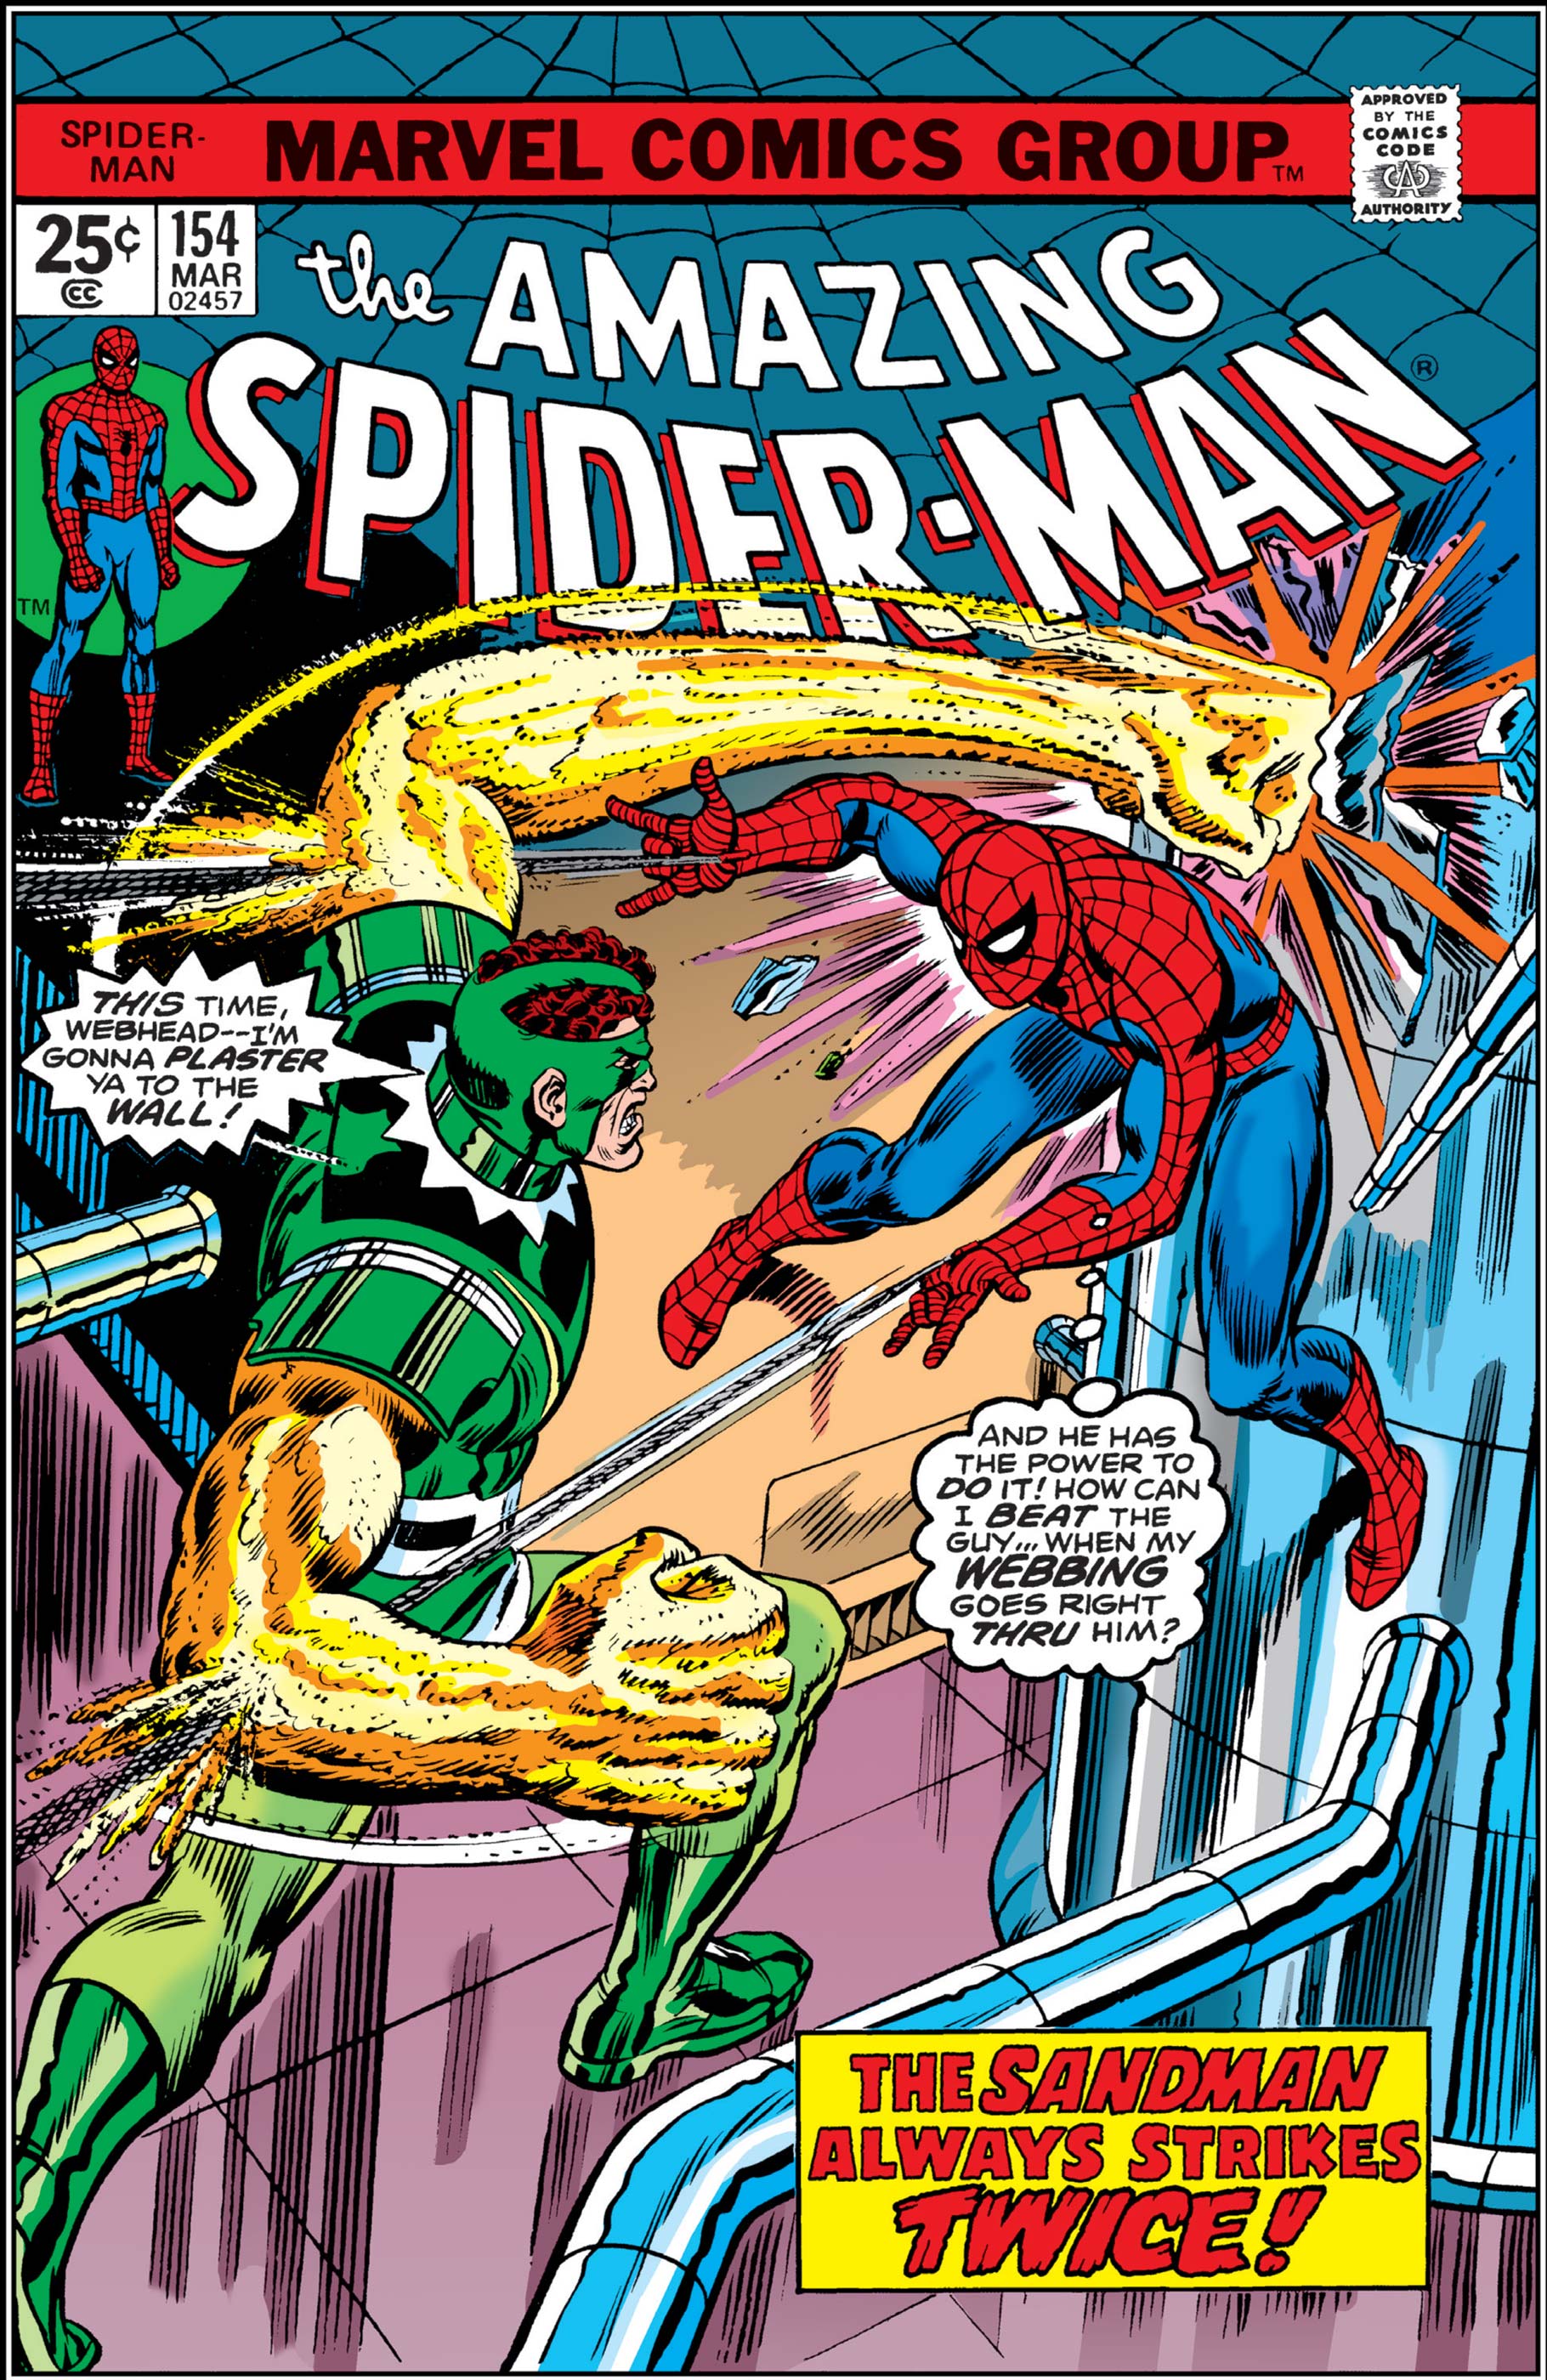 The Amazing Spider-Man (1963) #154